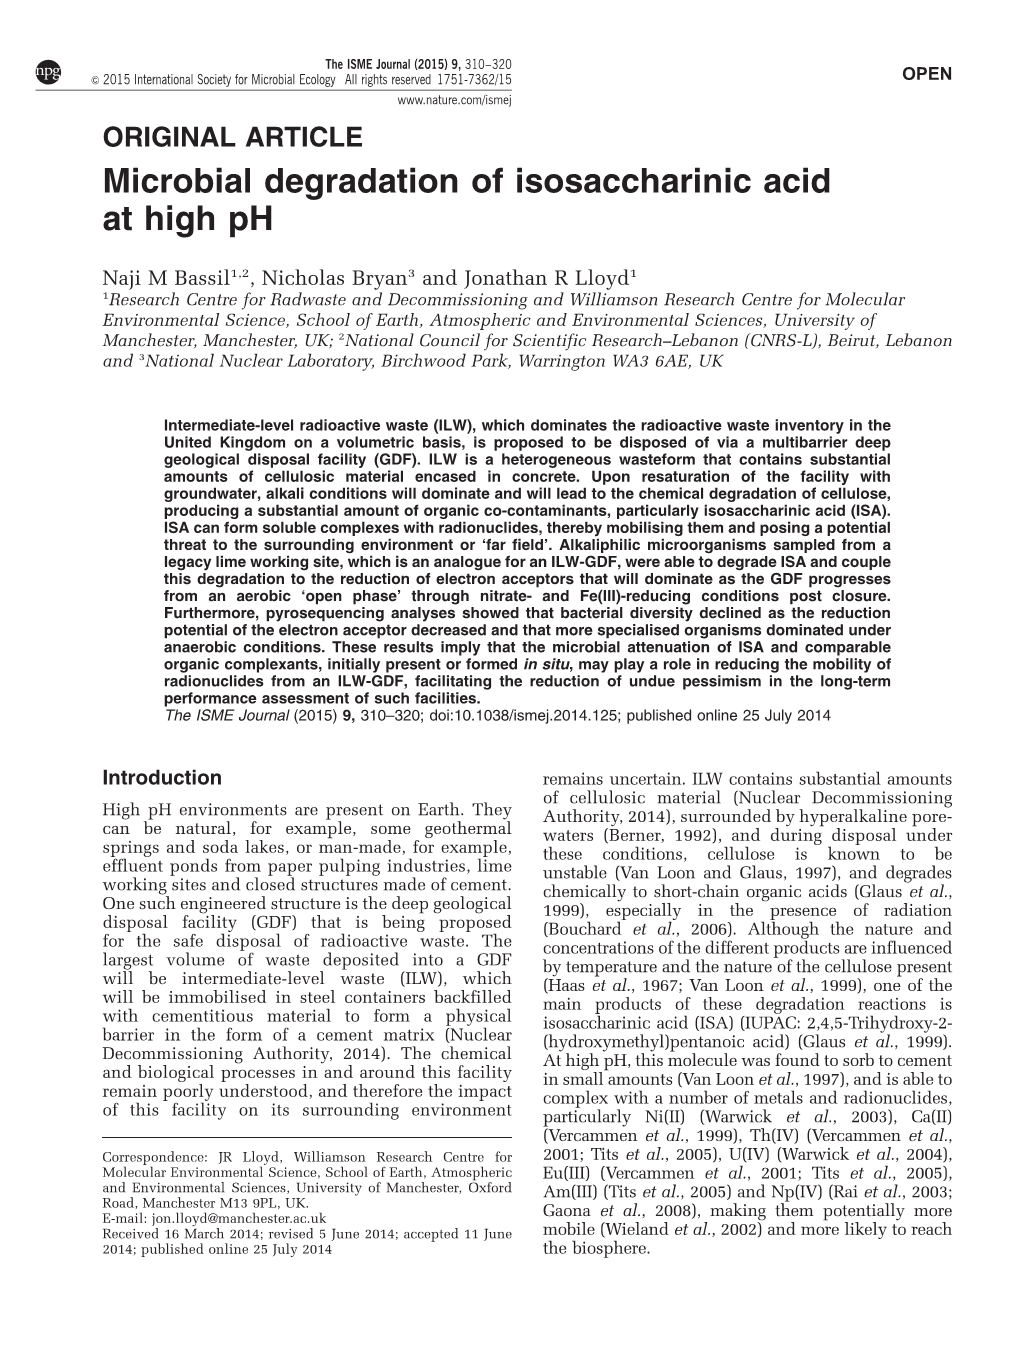 Microbial Degradation of Isosaccharinic Acid at High Ph